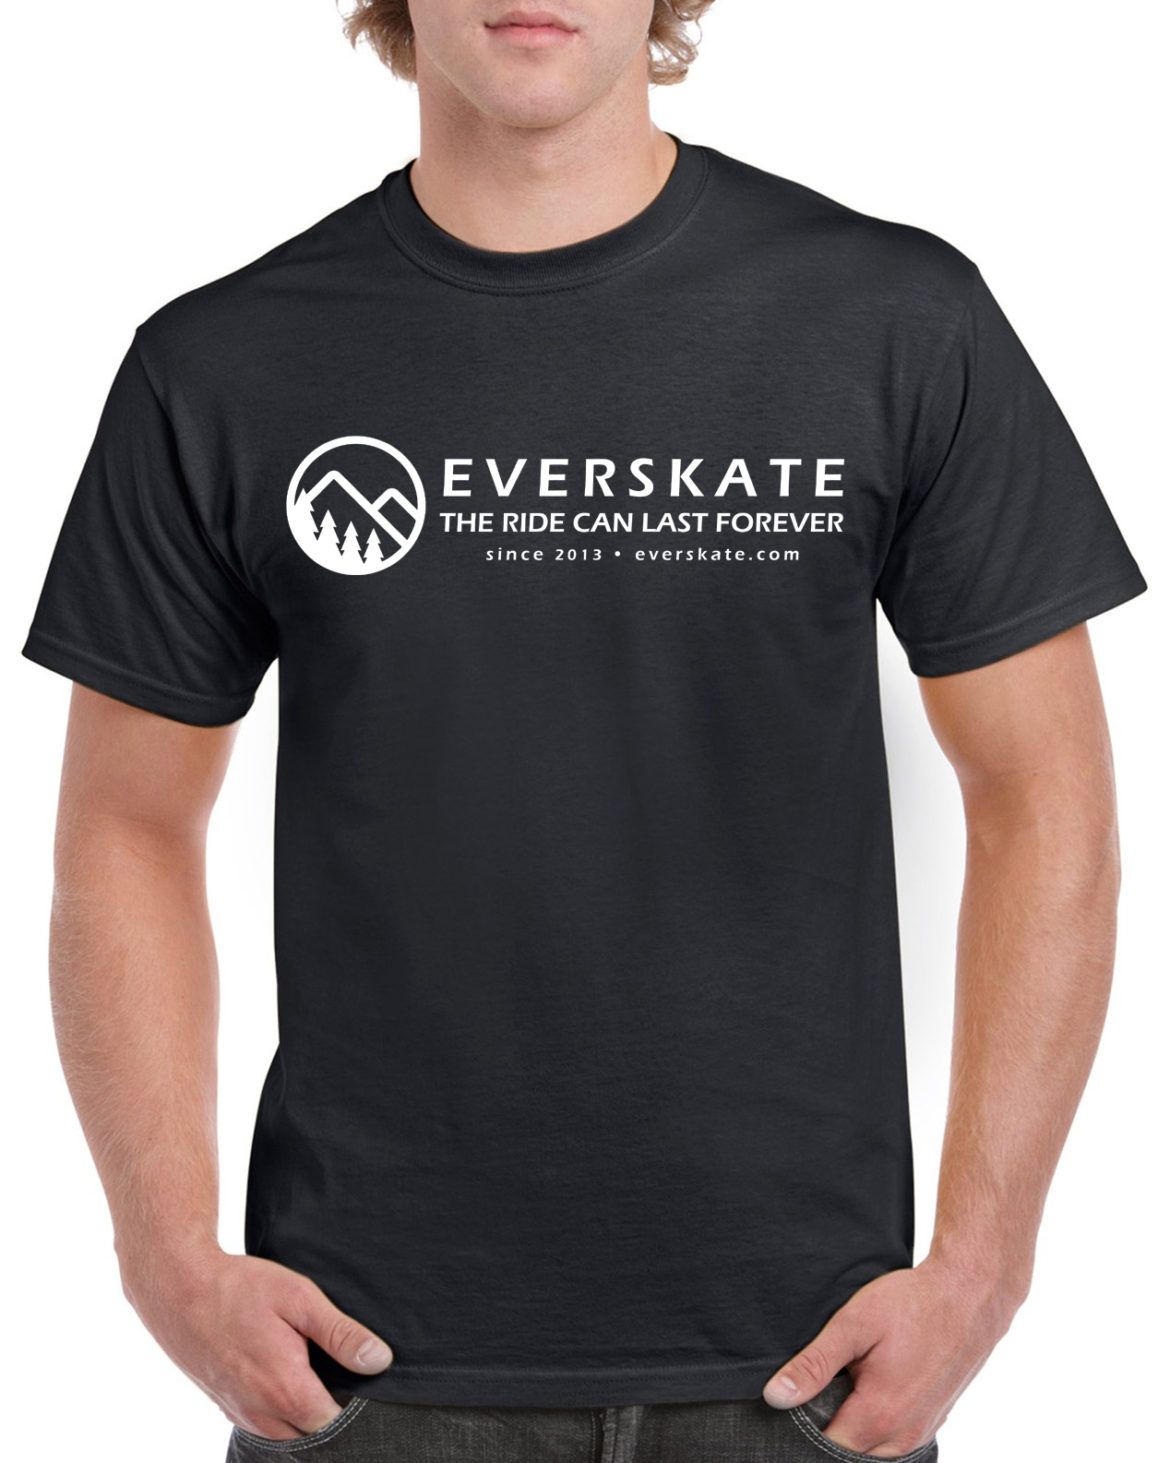 skateboard shirt, clothing, skate, thrasher